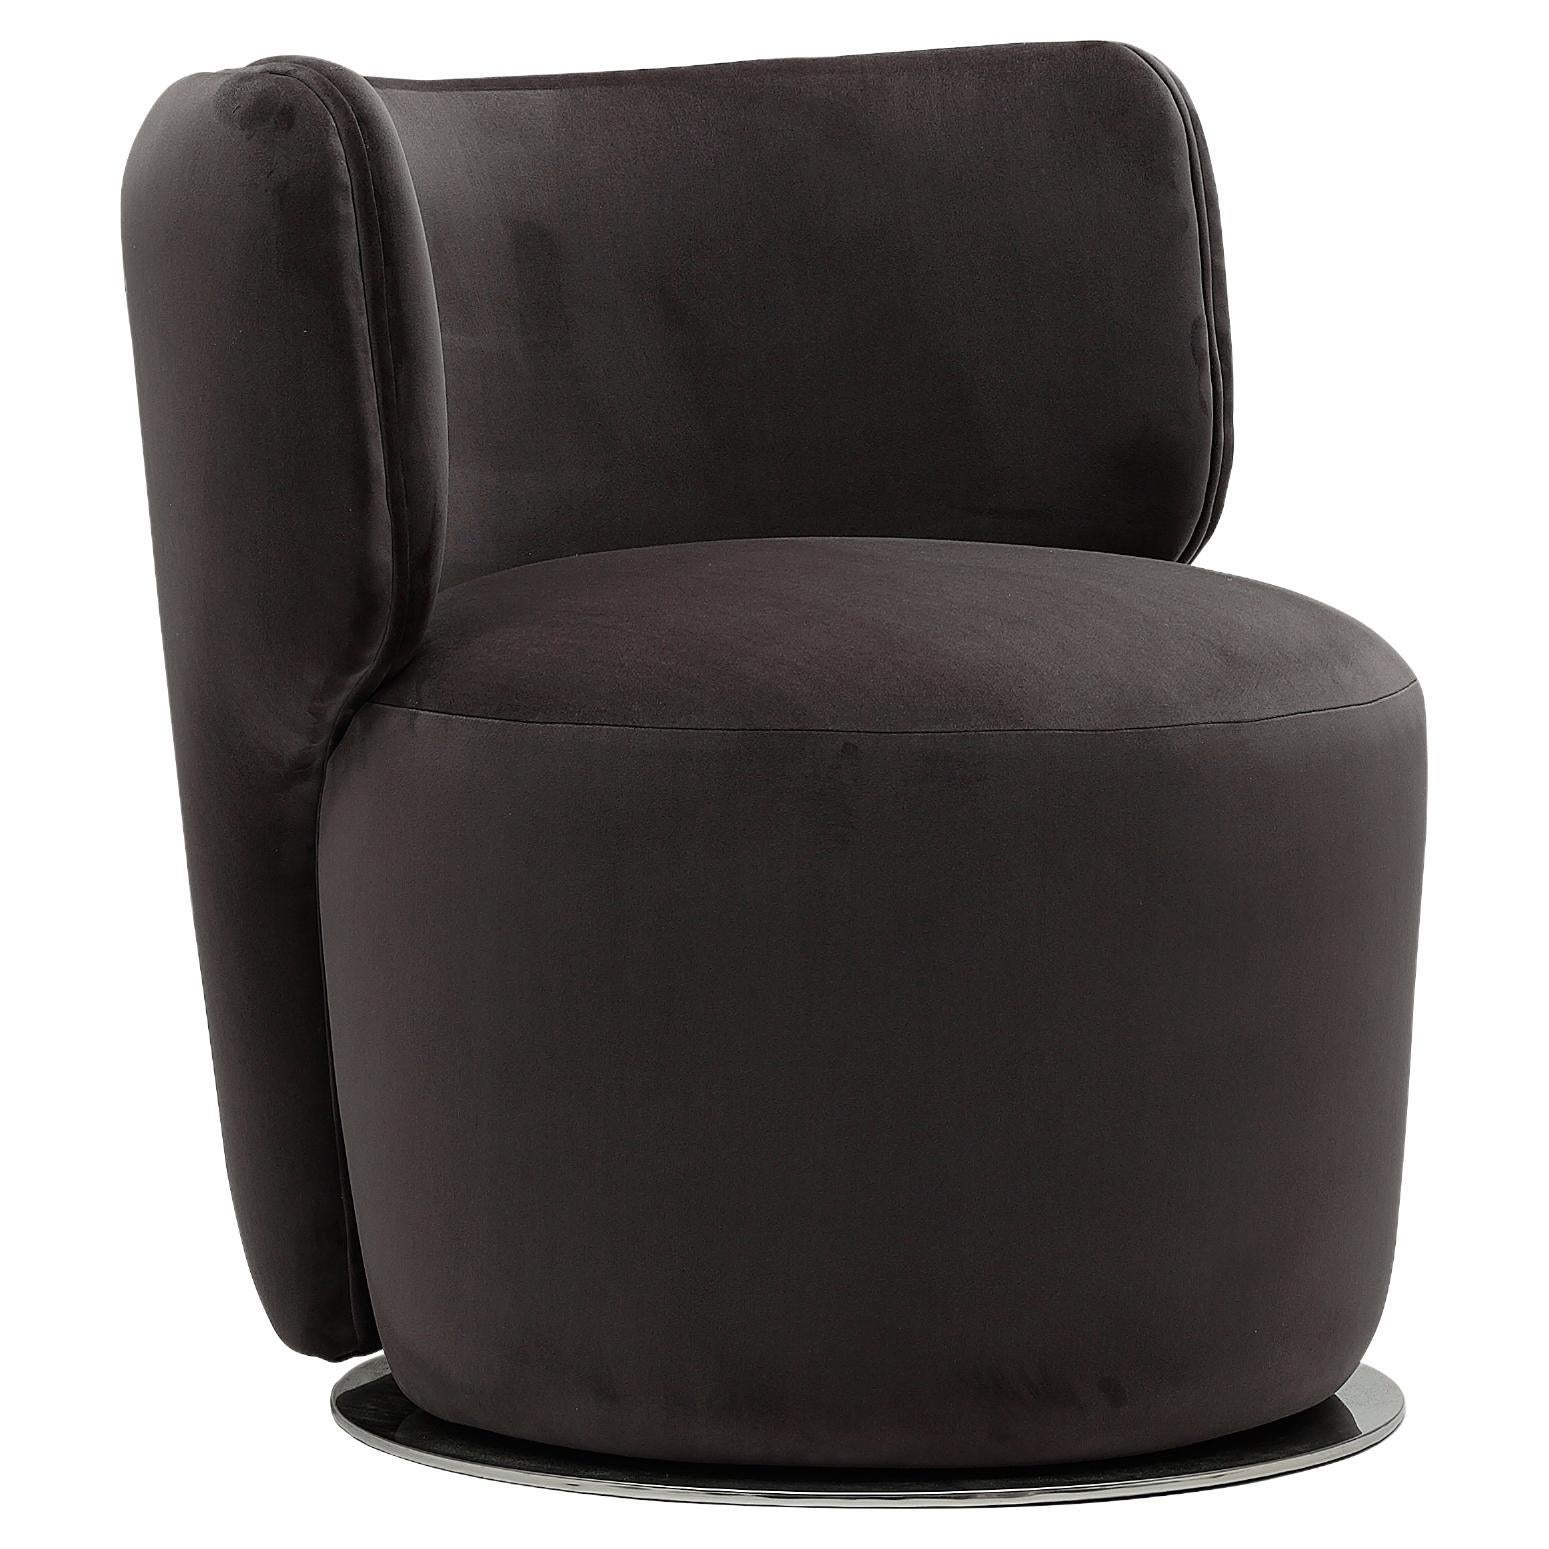 Sierra armchair, wood frame, leather/fabric upholstery, swivel base met.